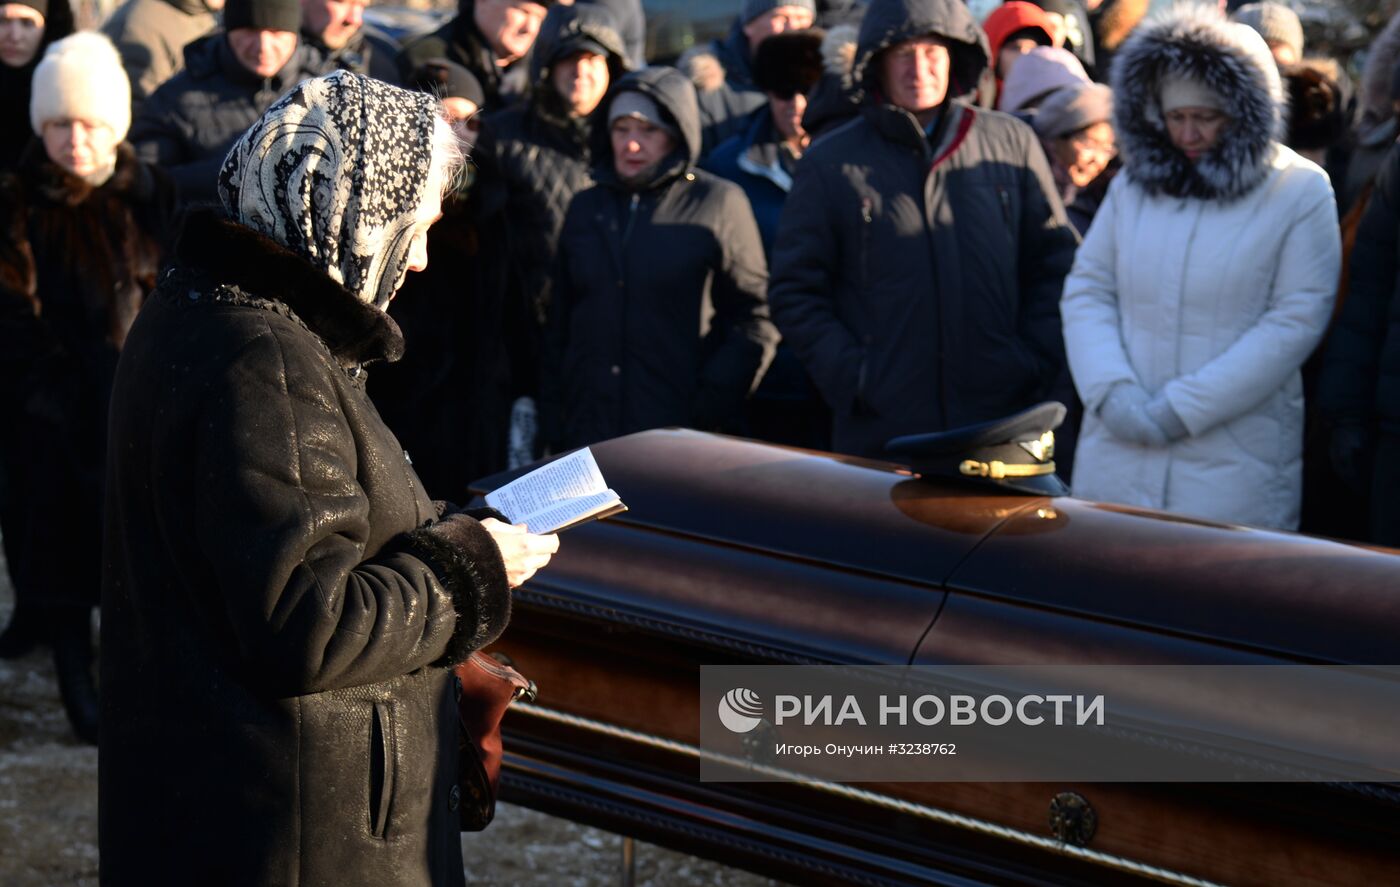 Прощание с летчиками, погибшими при крушении самолета, в Хабаровске